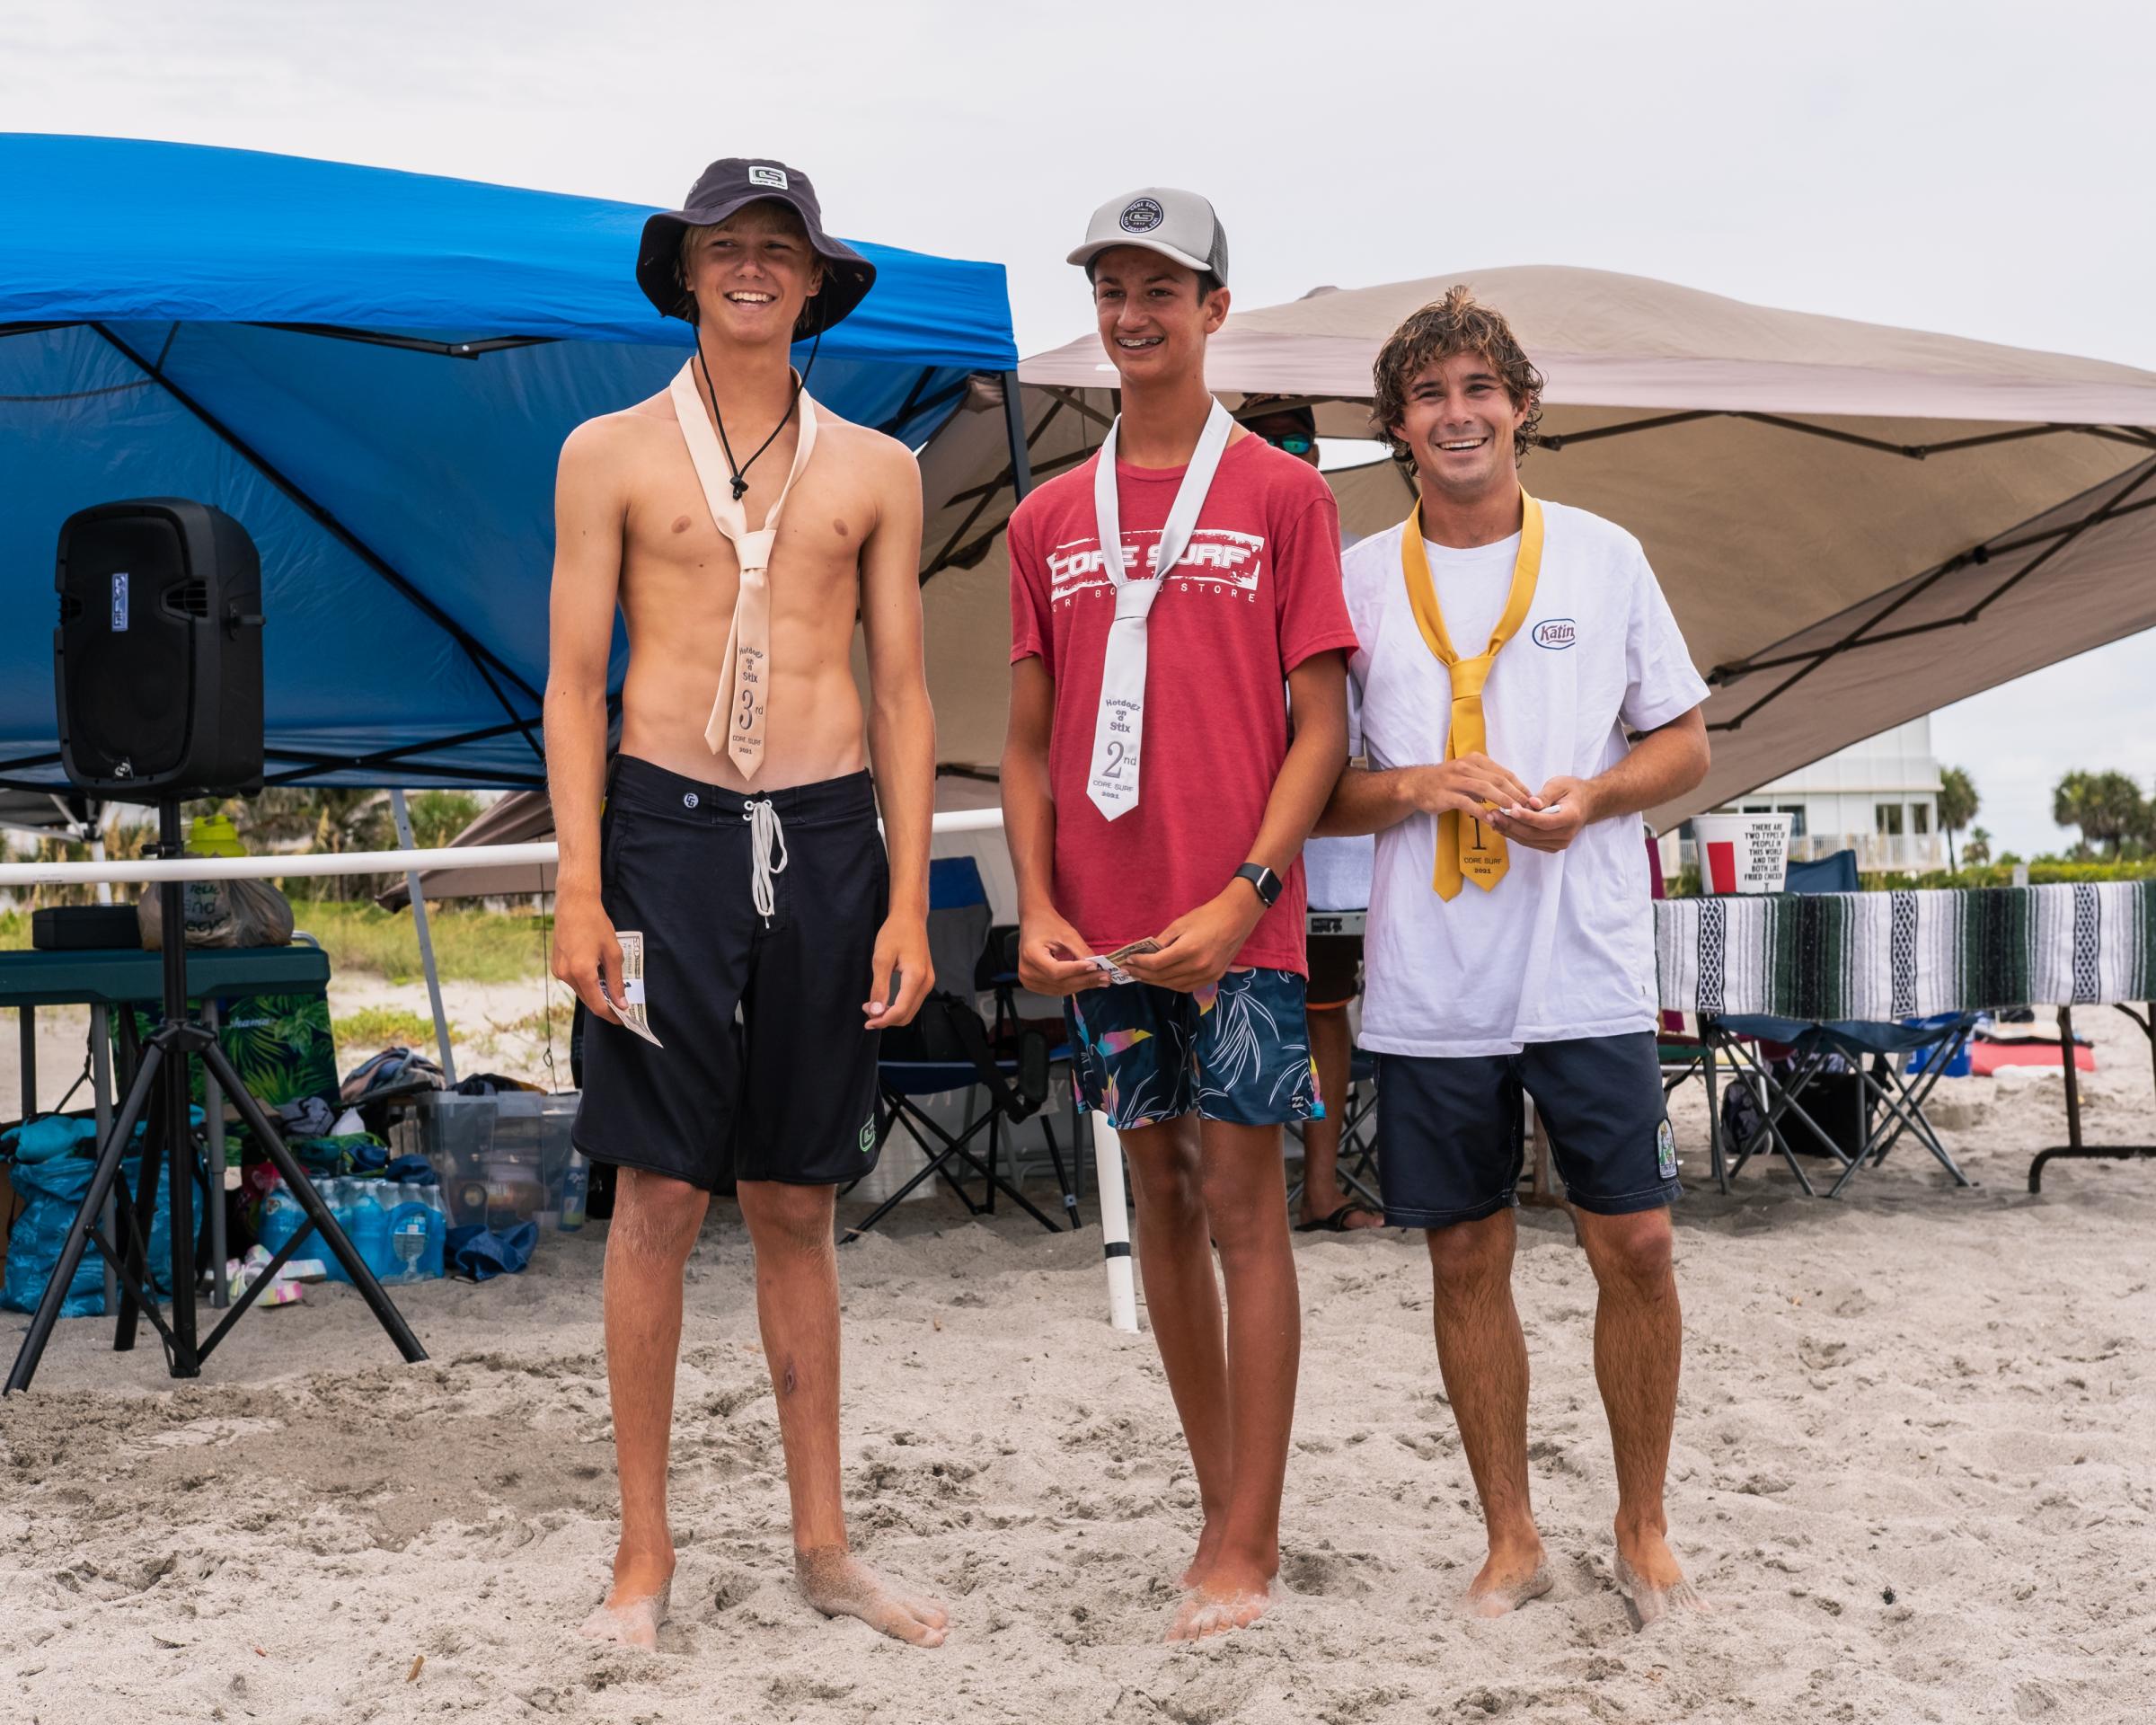 Cape Canaveral, FL. Hotdogzonastix Surf Contest July 2021 -  (L-R) Shane Konrad 3rd place, Gavin Idone 2nd place,...